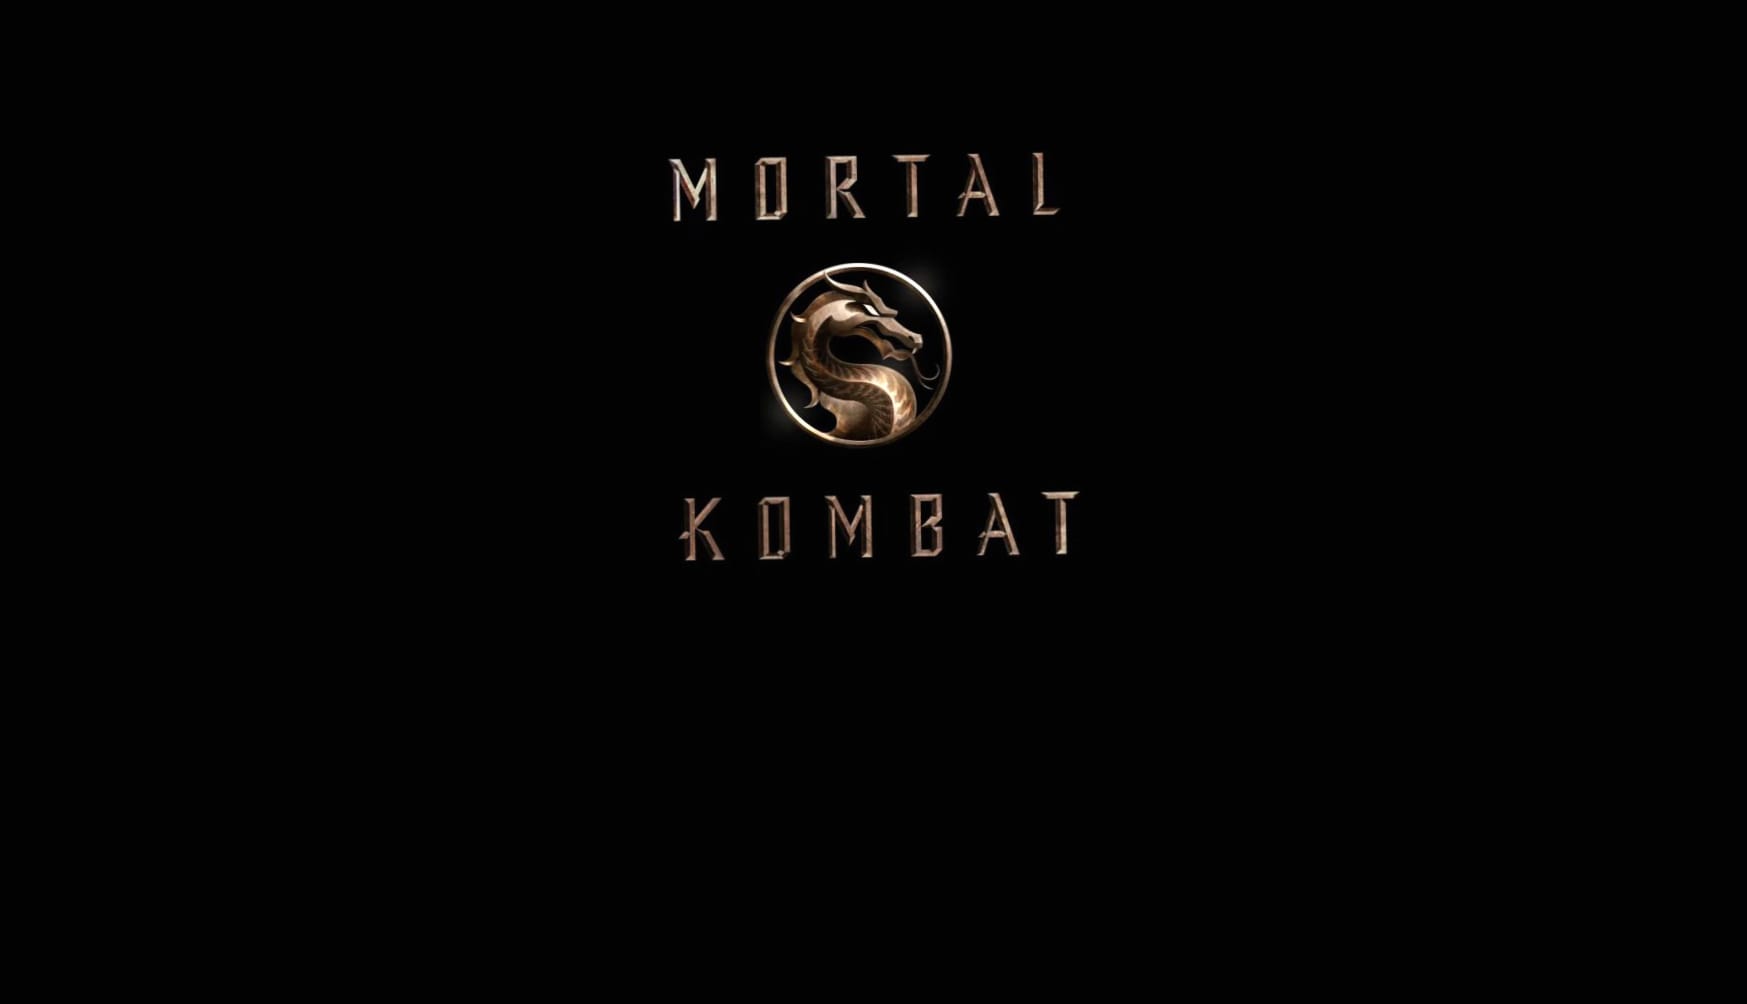 Mortal Kombat (2021) at 1024 x 768 size wallpapers HD quality